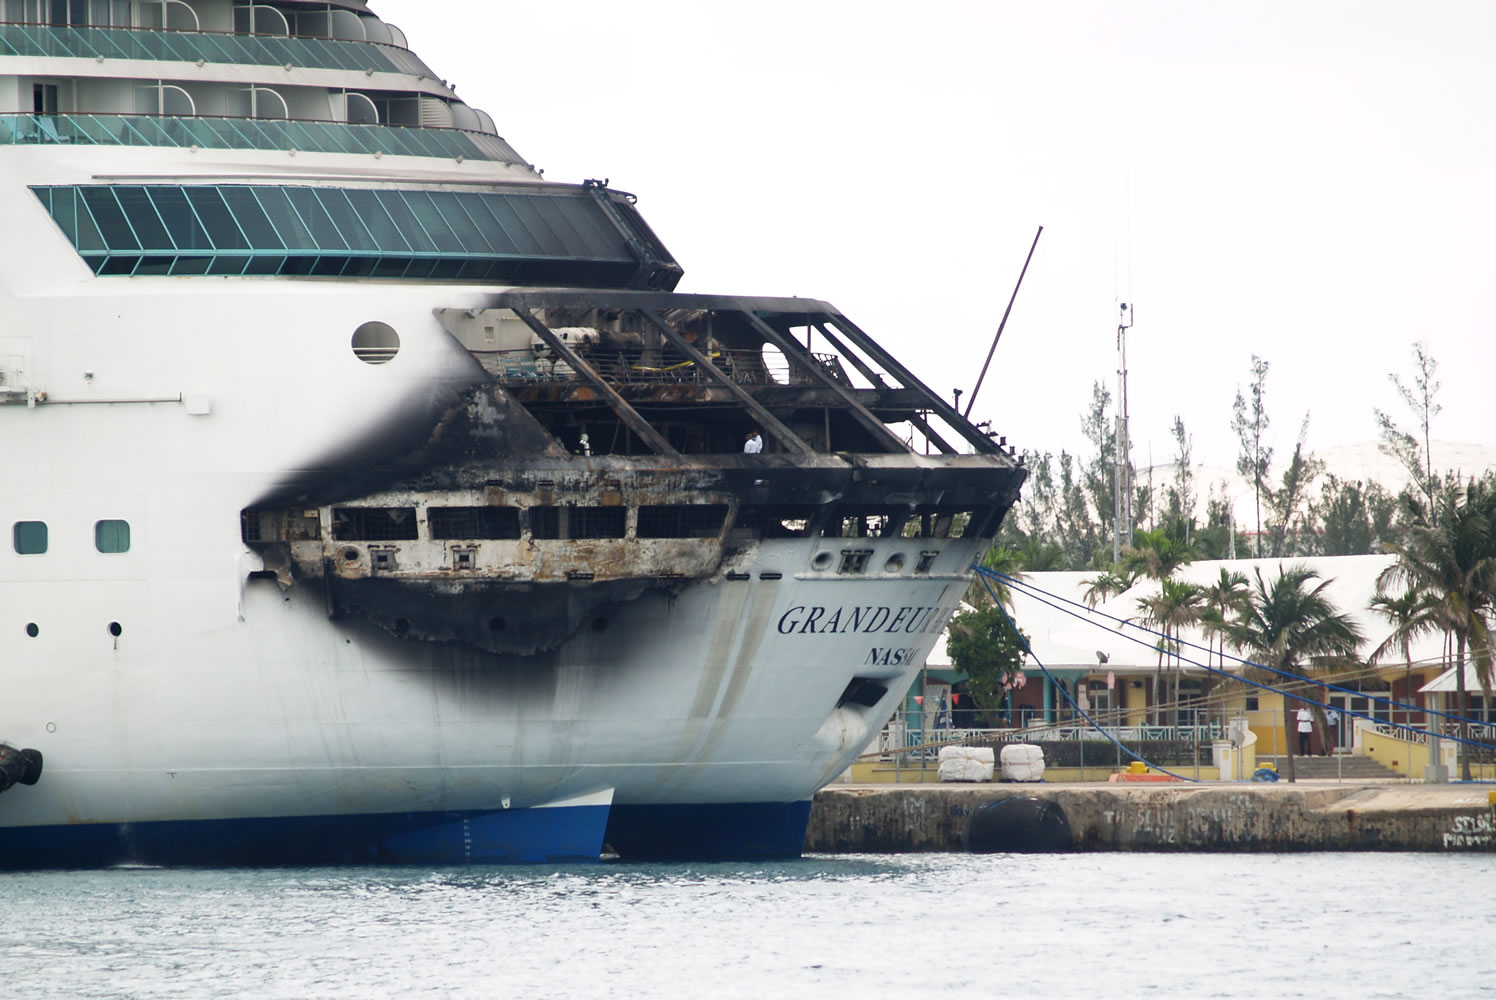 cruise ship engine fire 2015